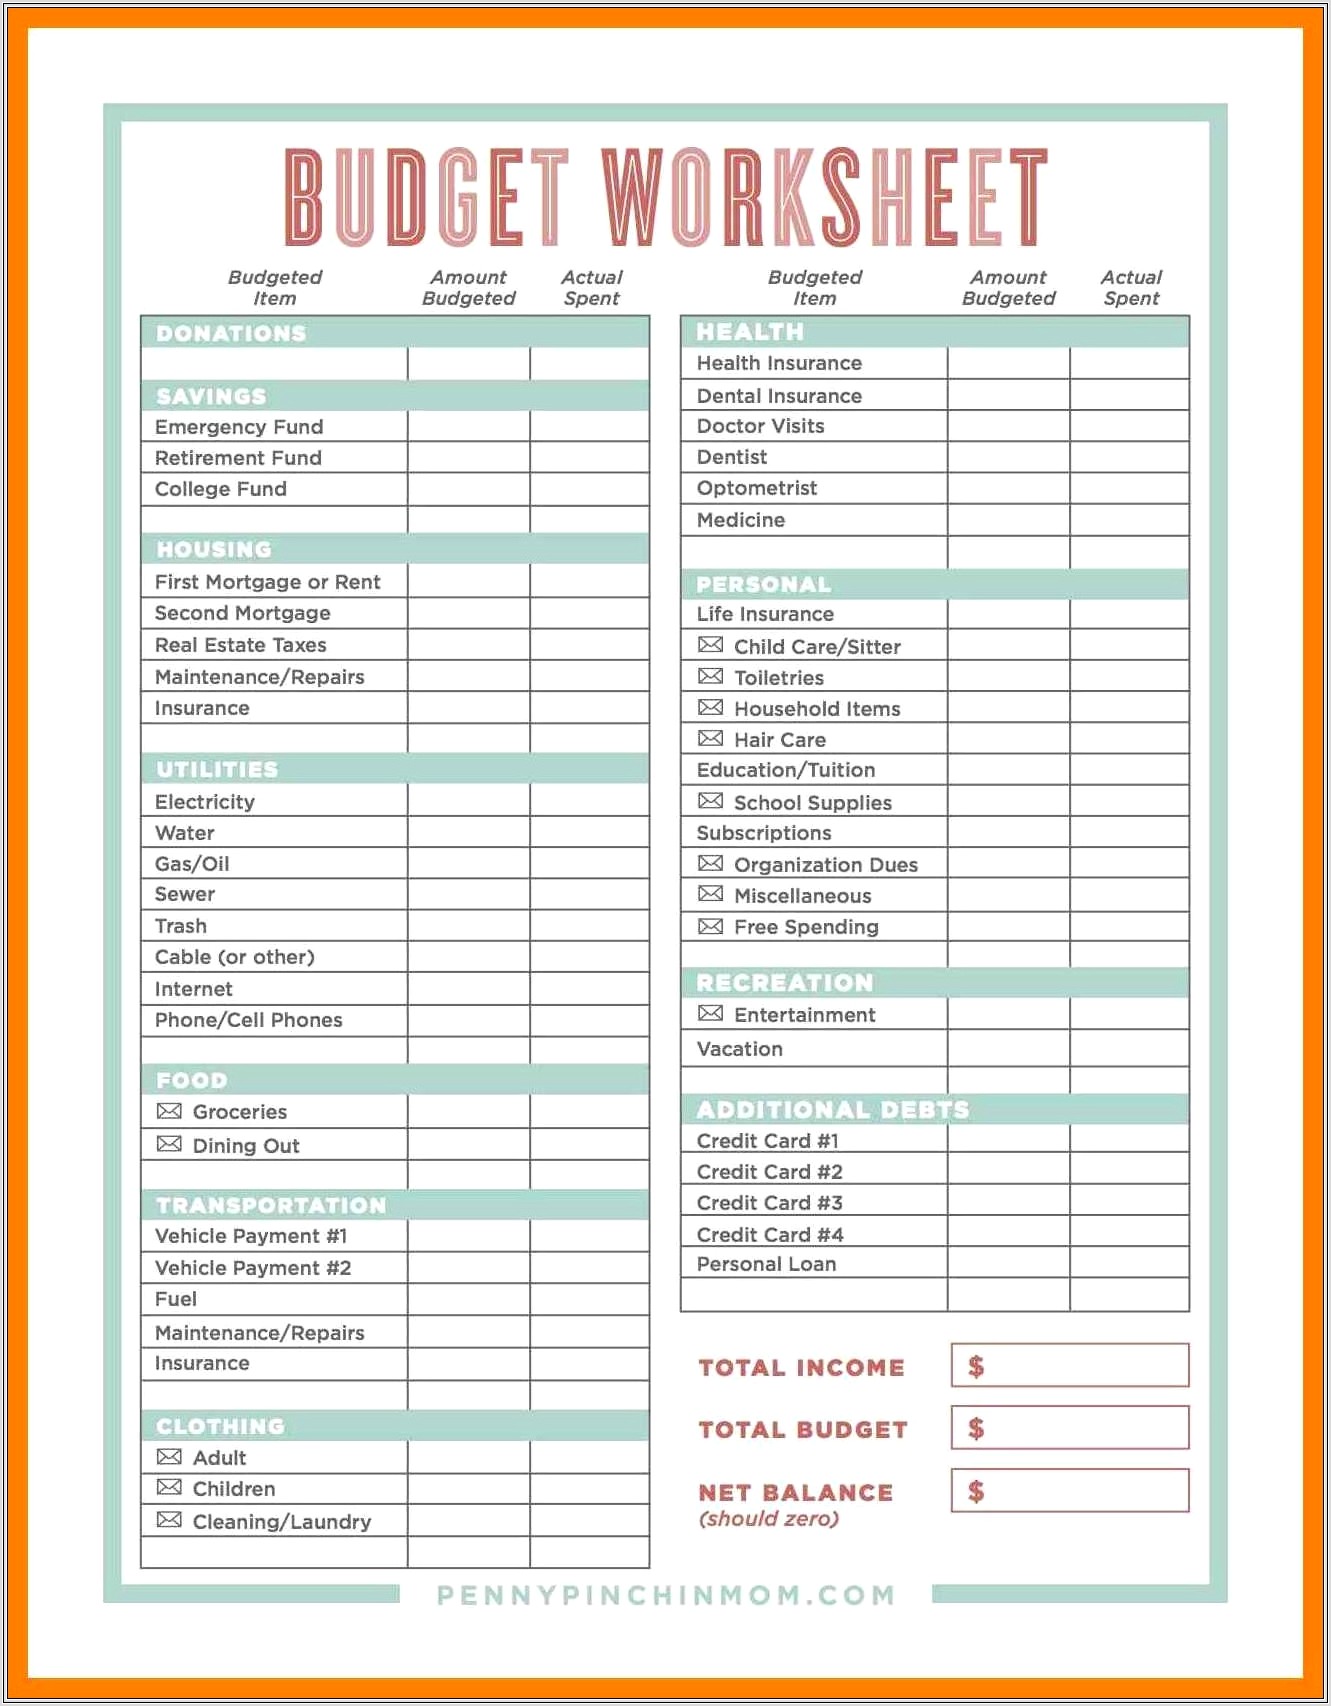 How To Make Budget Worksheet On Excel